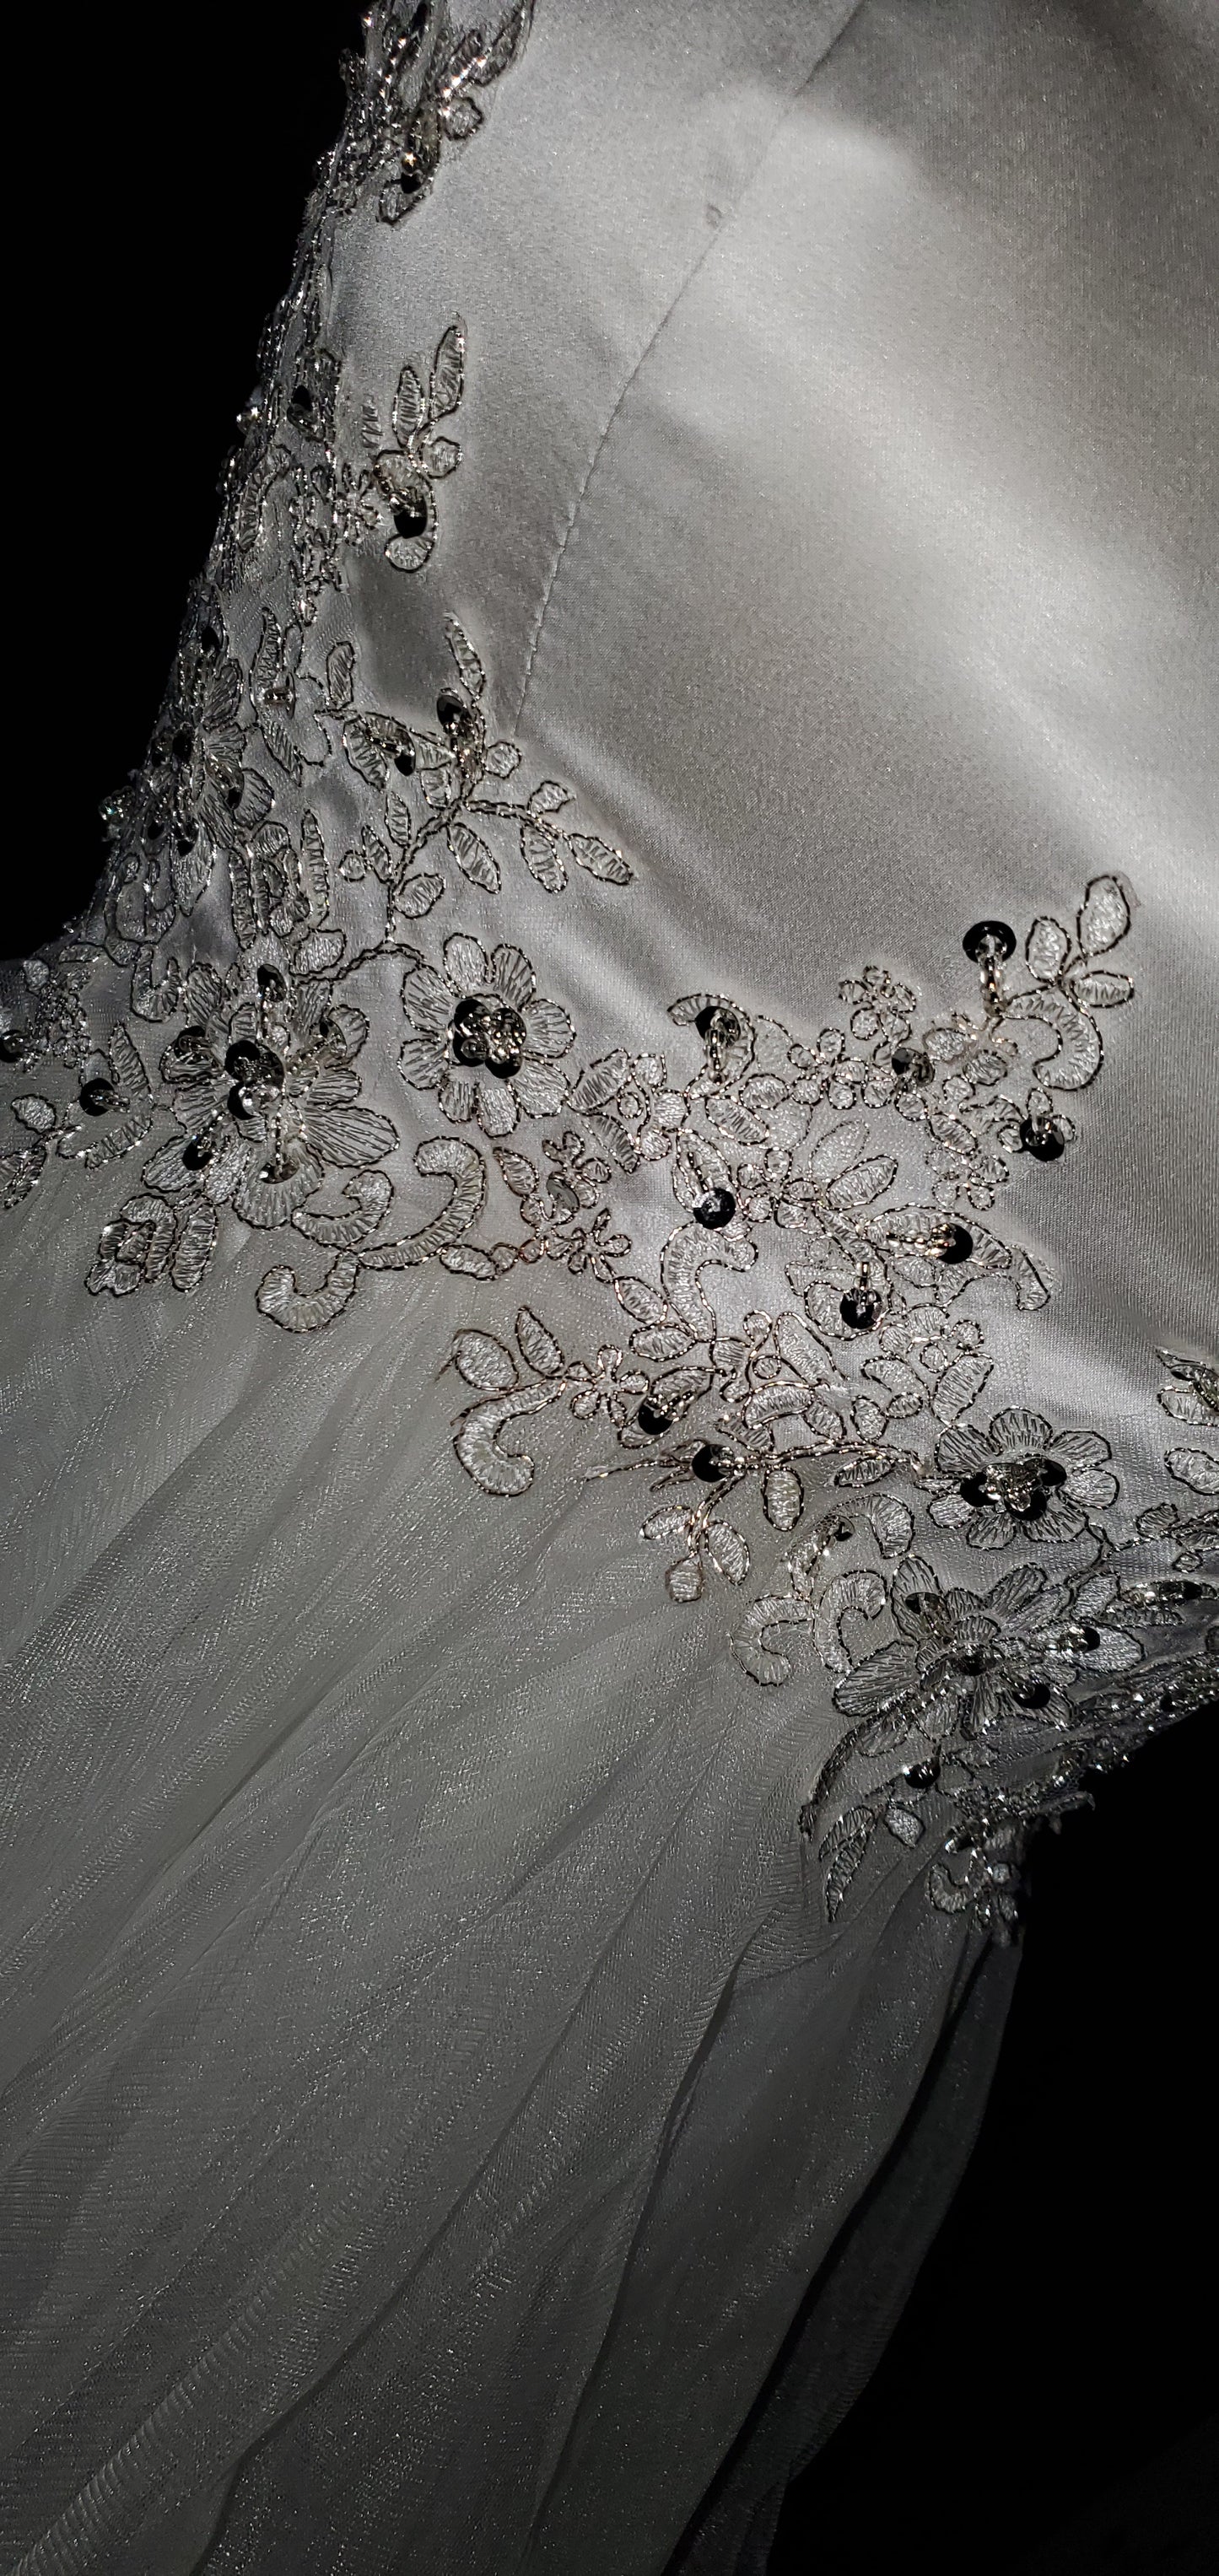 White Custom Strapless Prom Dress Size 4-6|Like New!